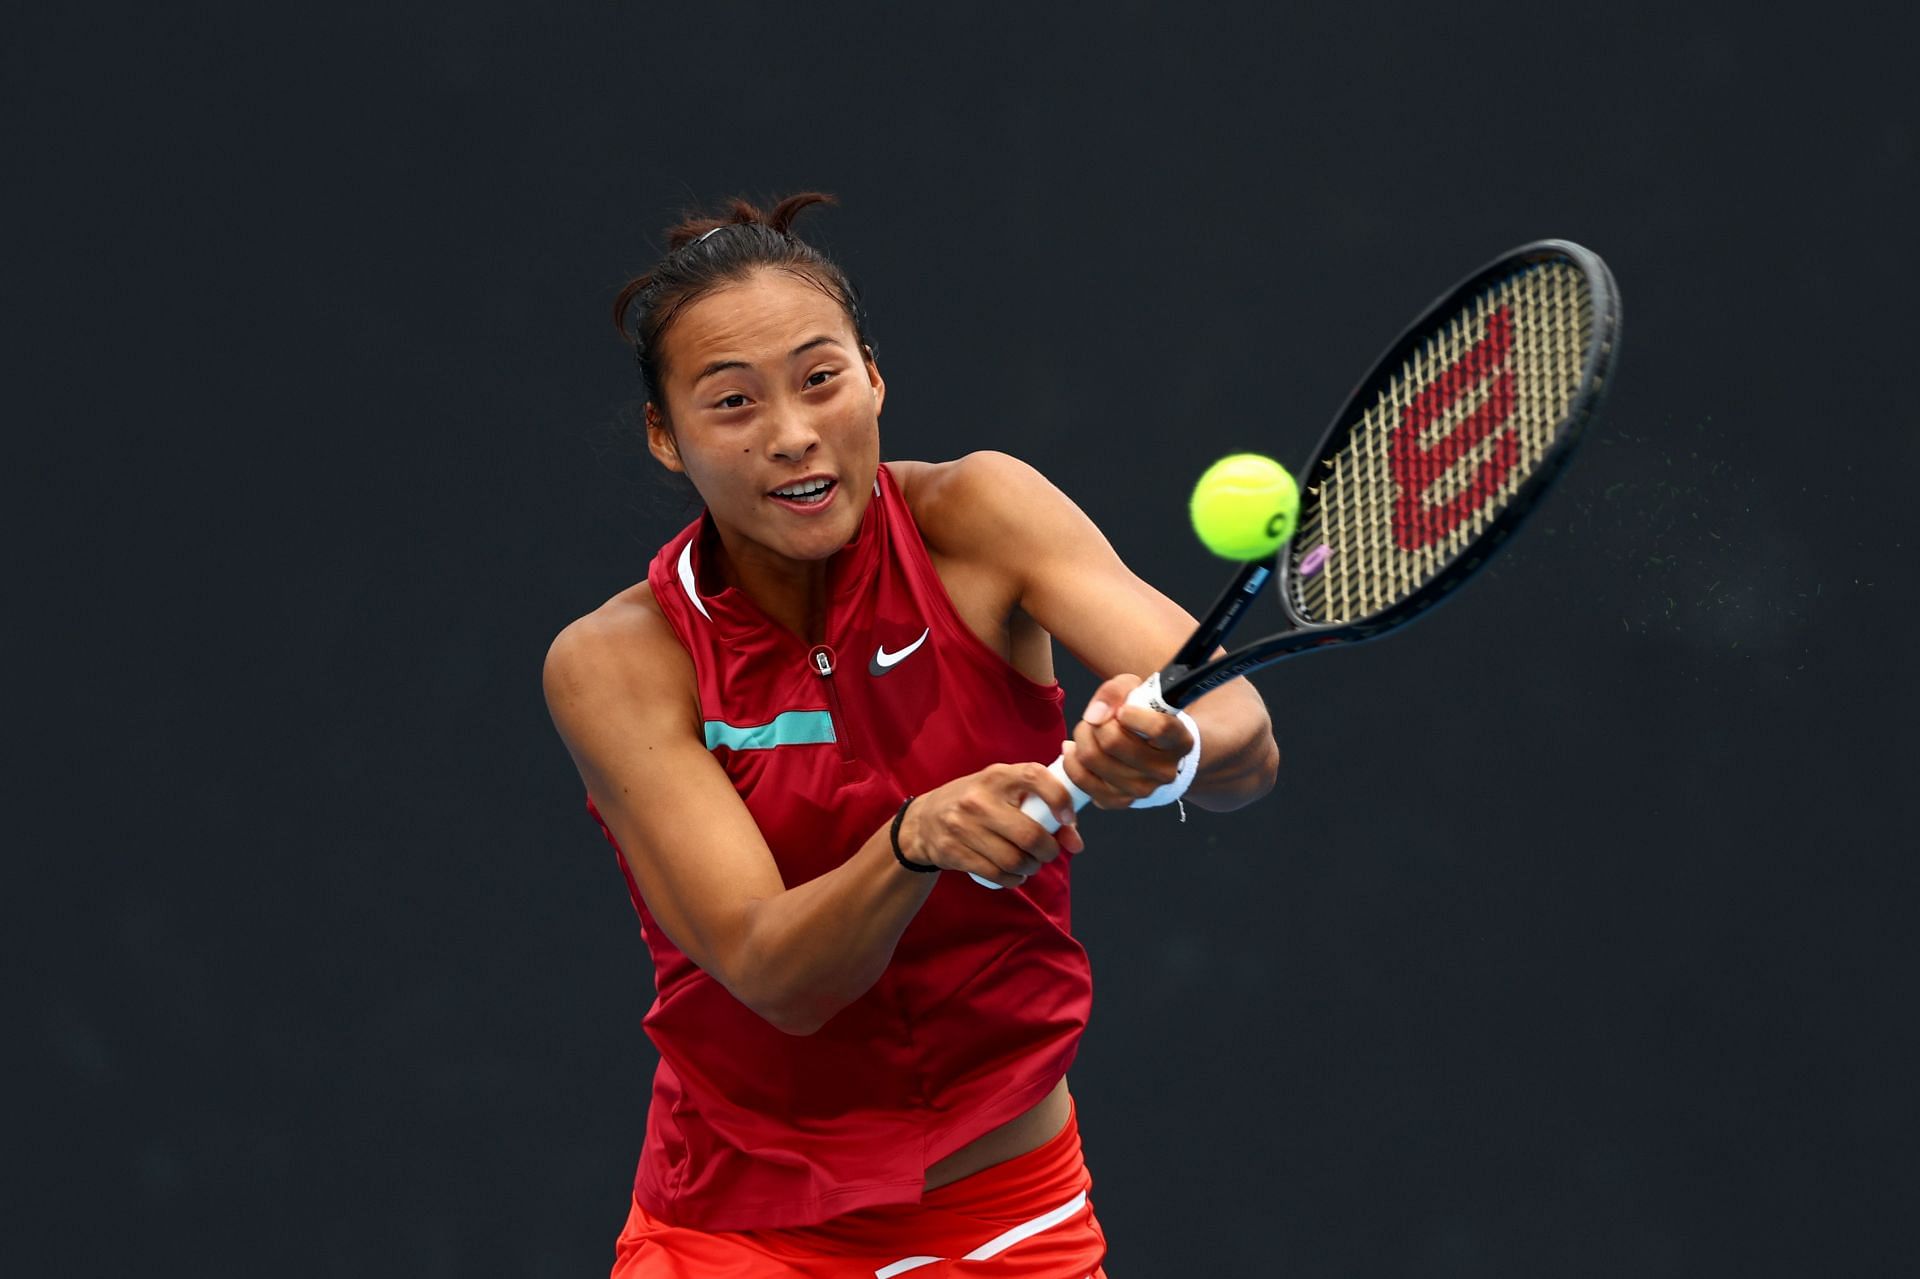 Zheng strikes the ball at the 2022 Australian Open